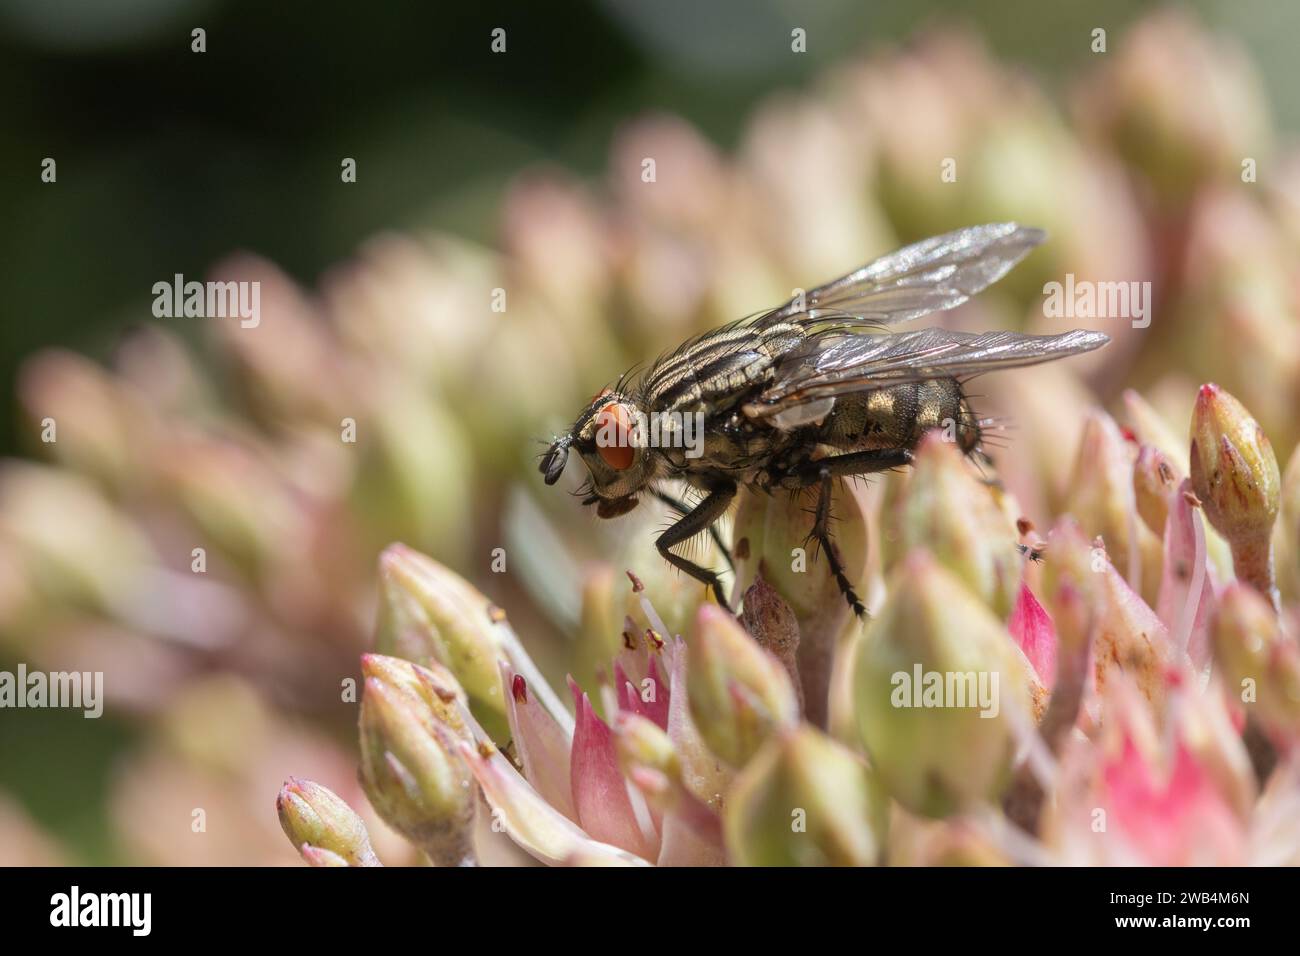 Close-up of a Flesh-Fly (Sarcophaga carnaria) on Sedum Stock Photo